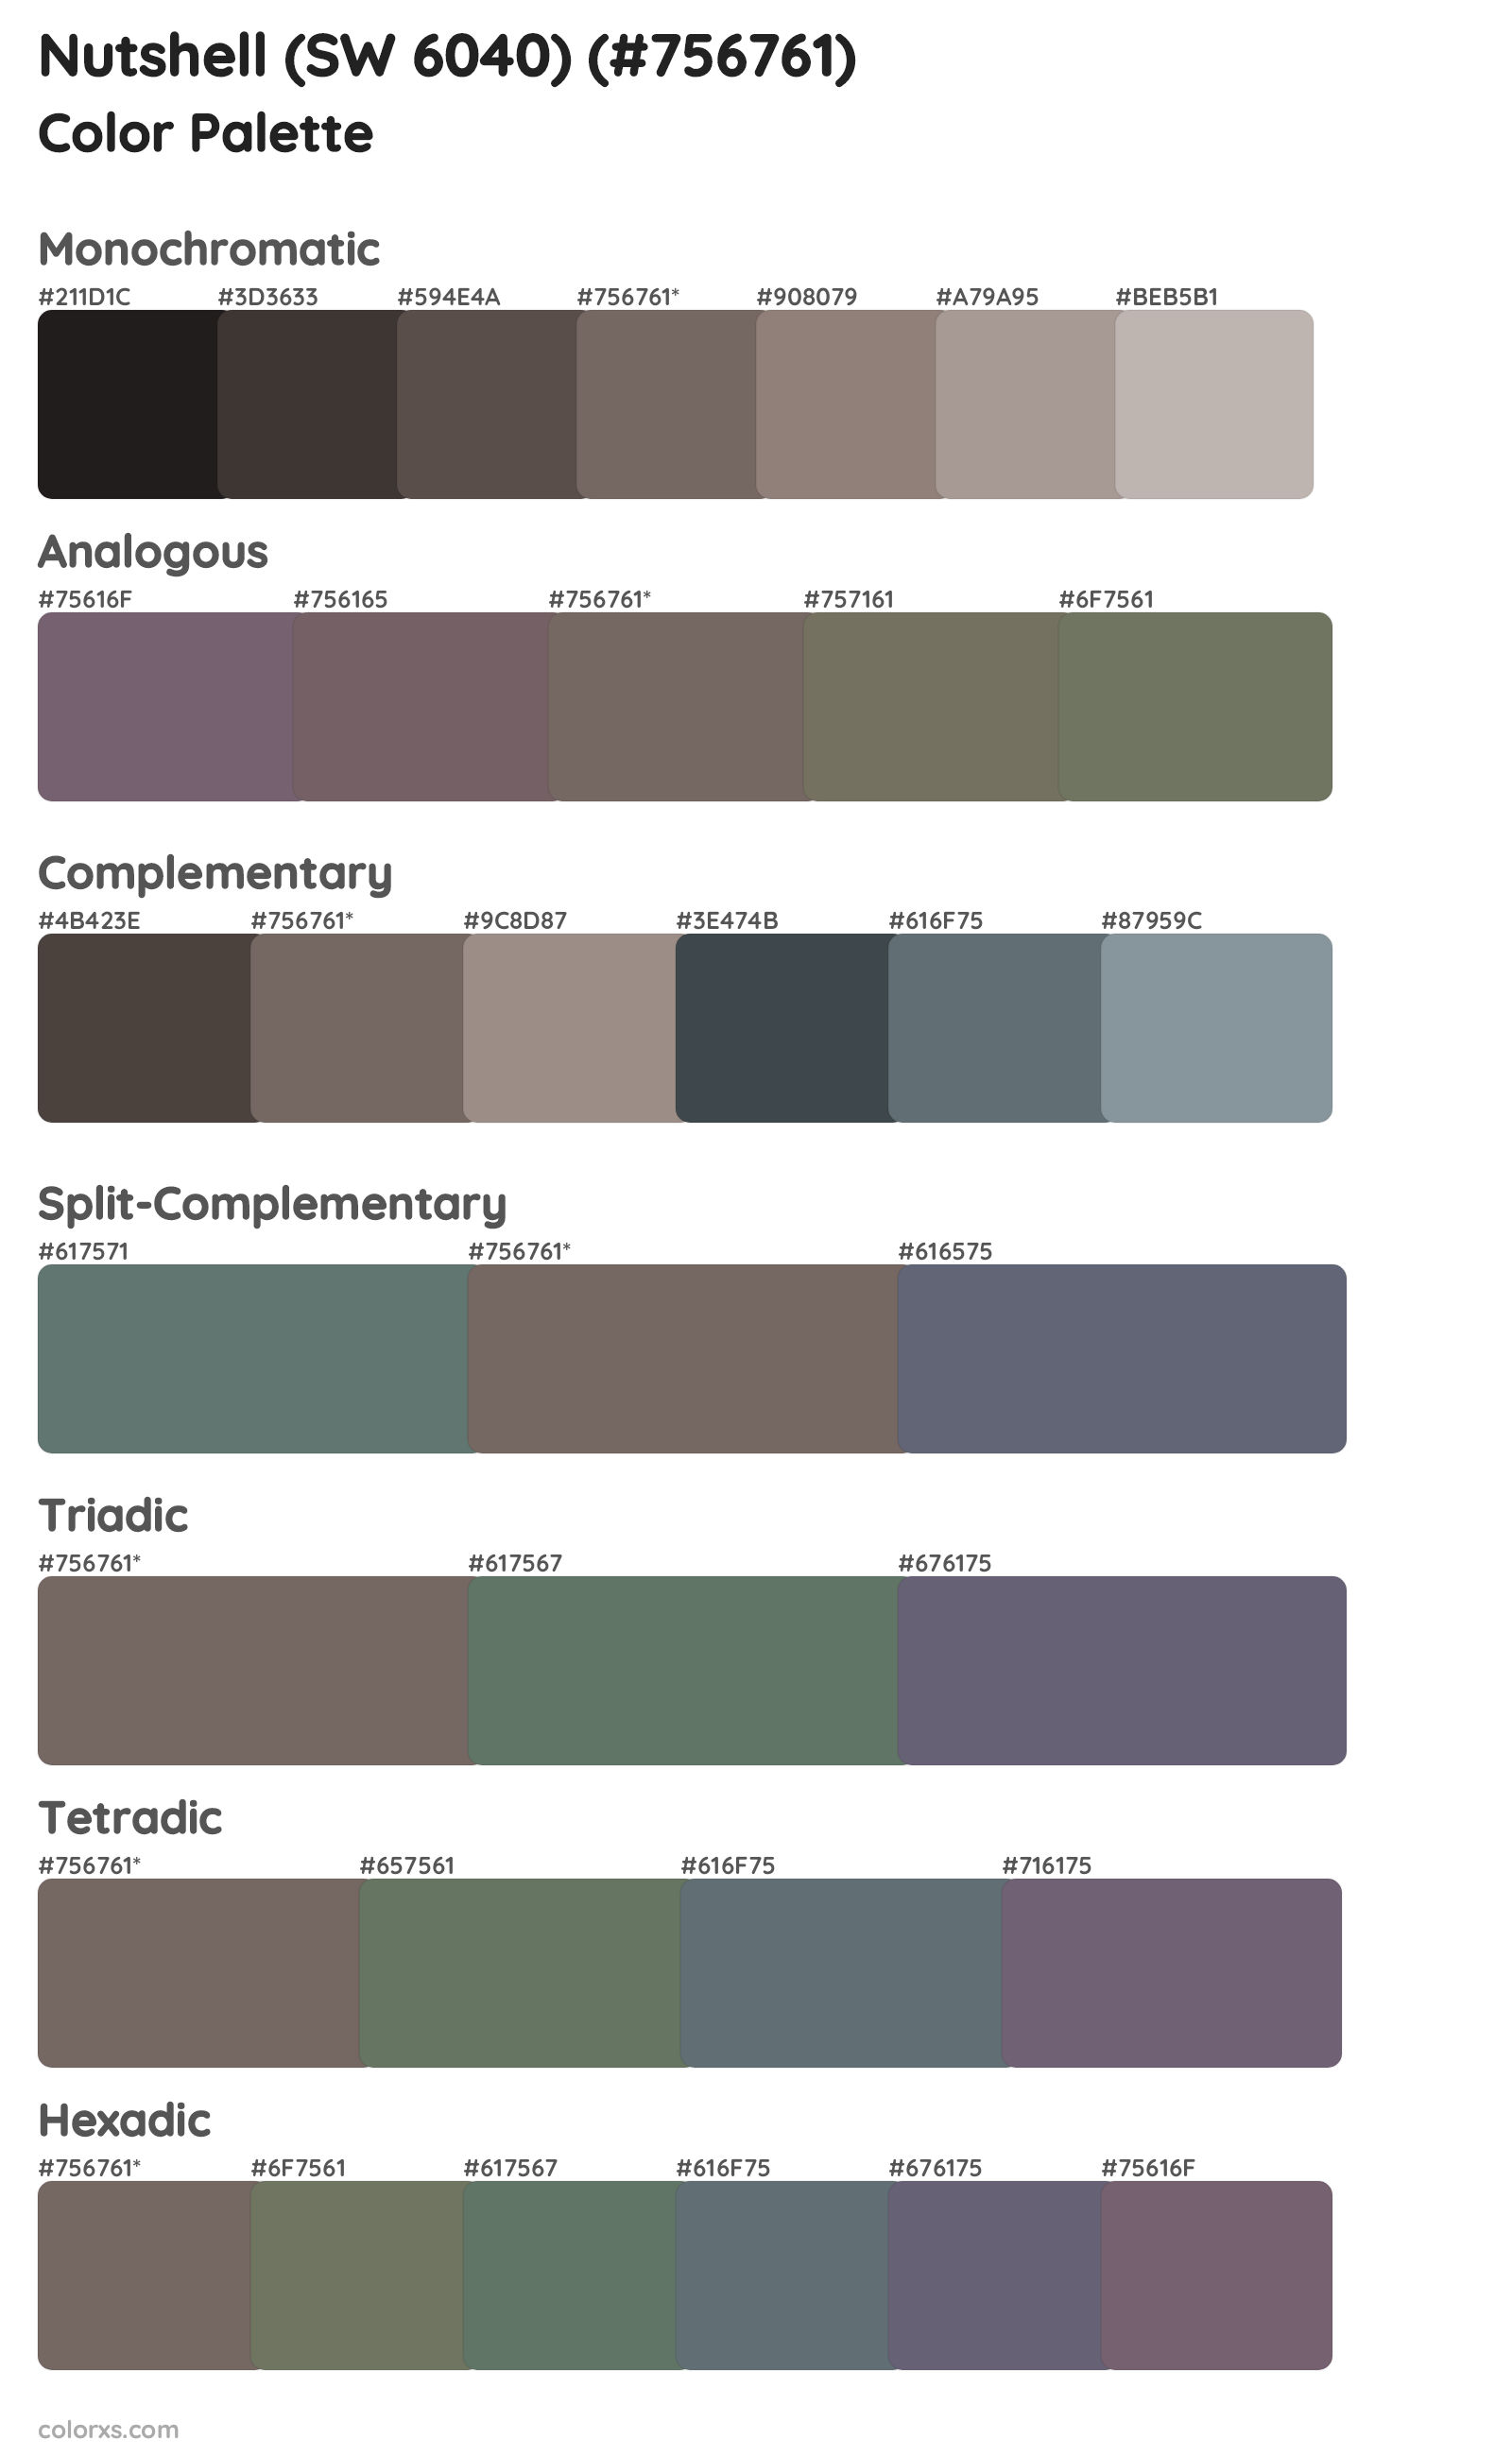 Nutshell (SW 6040) Color Scheme Palettes